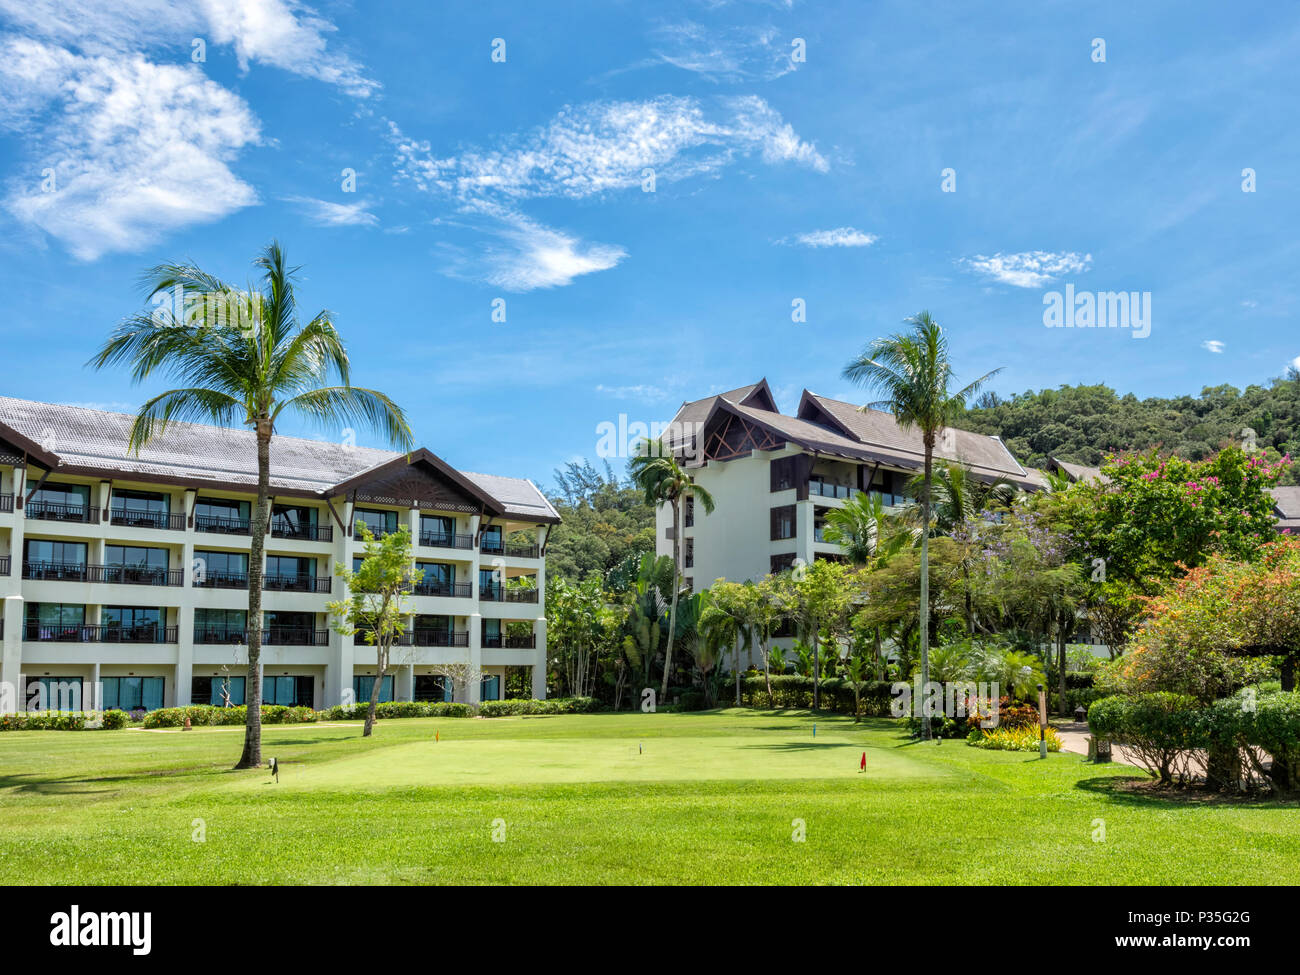 The Hotel buildings and croquet lawn at the Shangri La Rasa Ria Hotel and Resort in Kota Kinabalu, Borneo, Malaysia Stock Photo